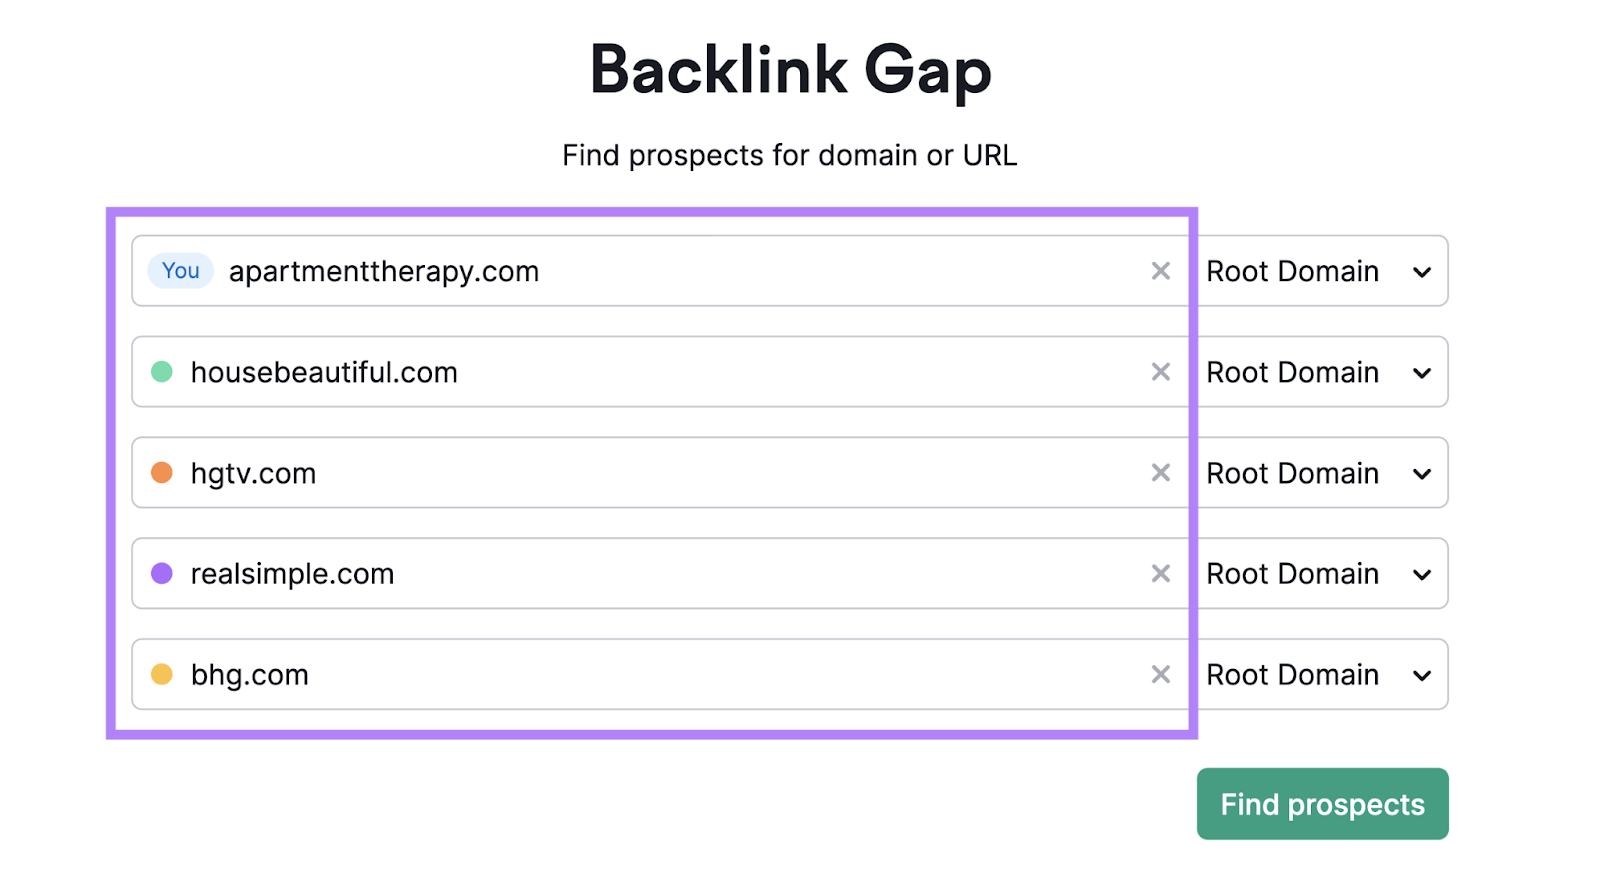 Backlink Gap tool search bars